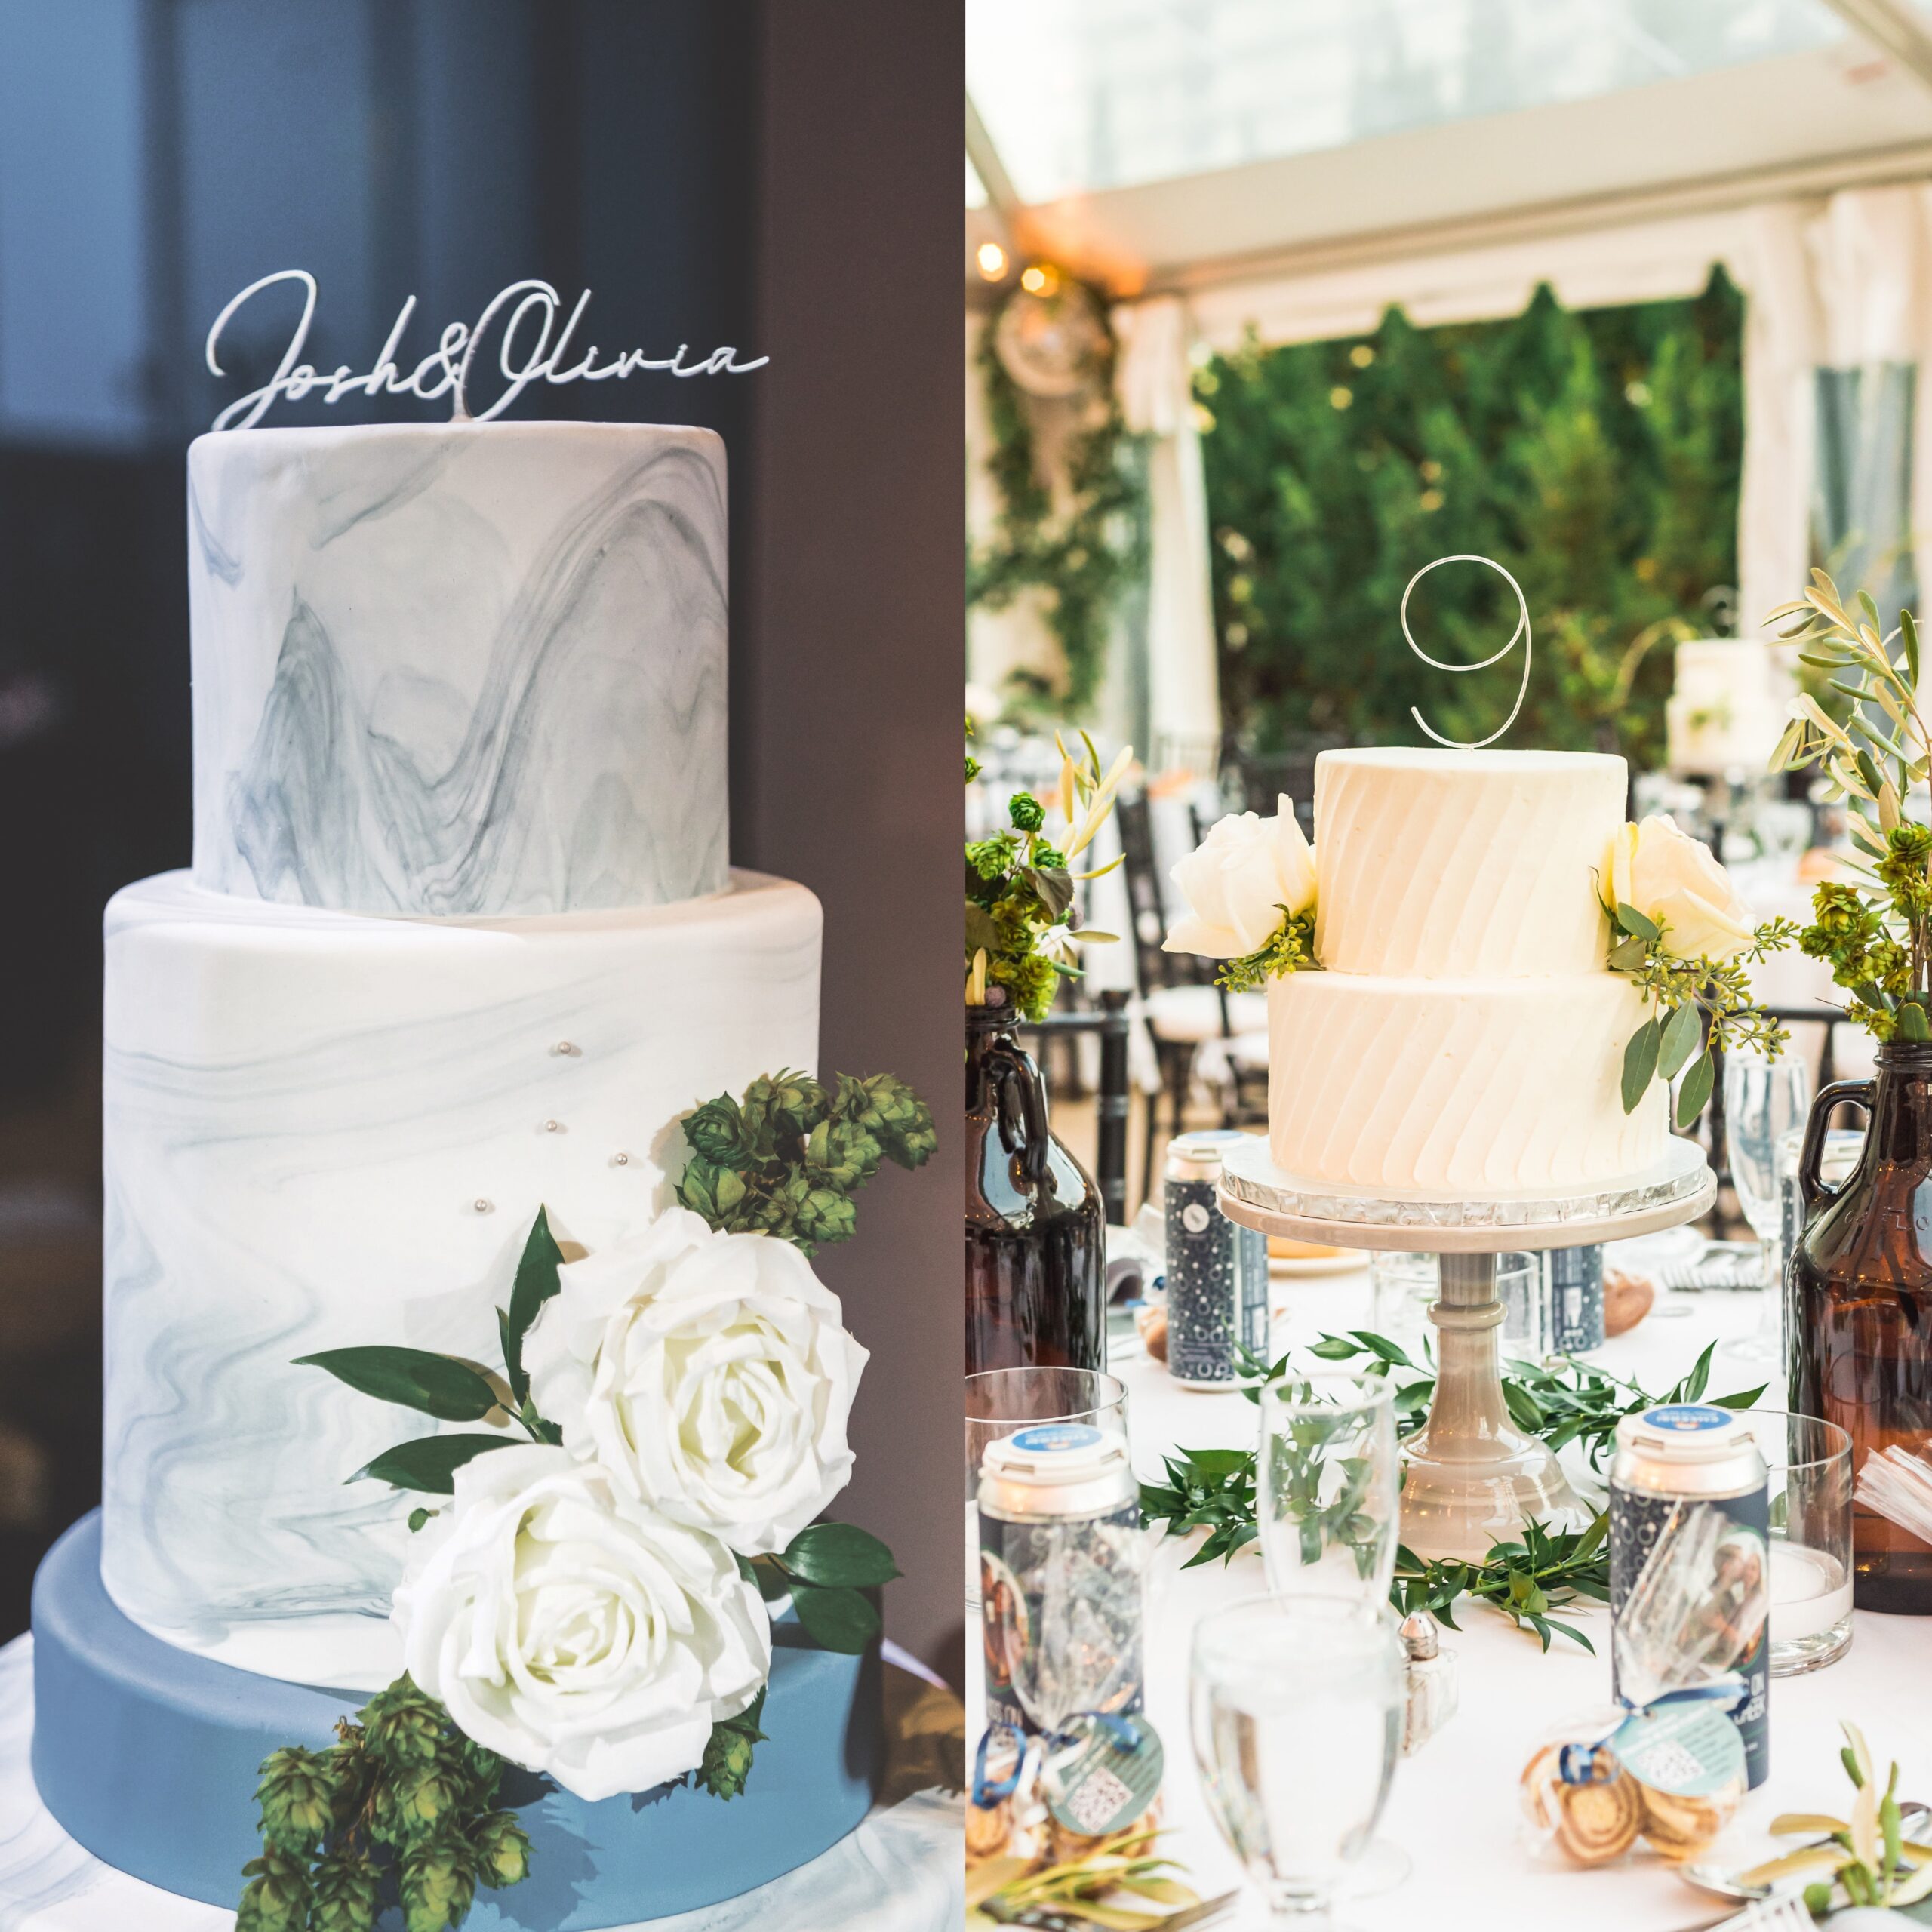 Wedding cakes by Chocolate Carousel